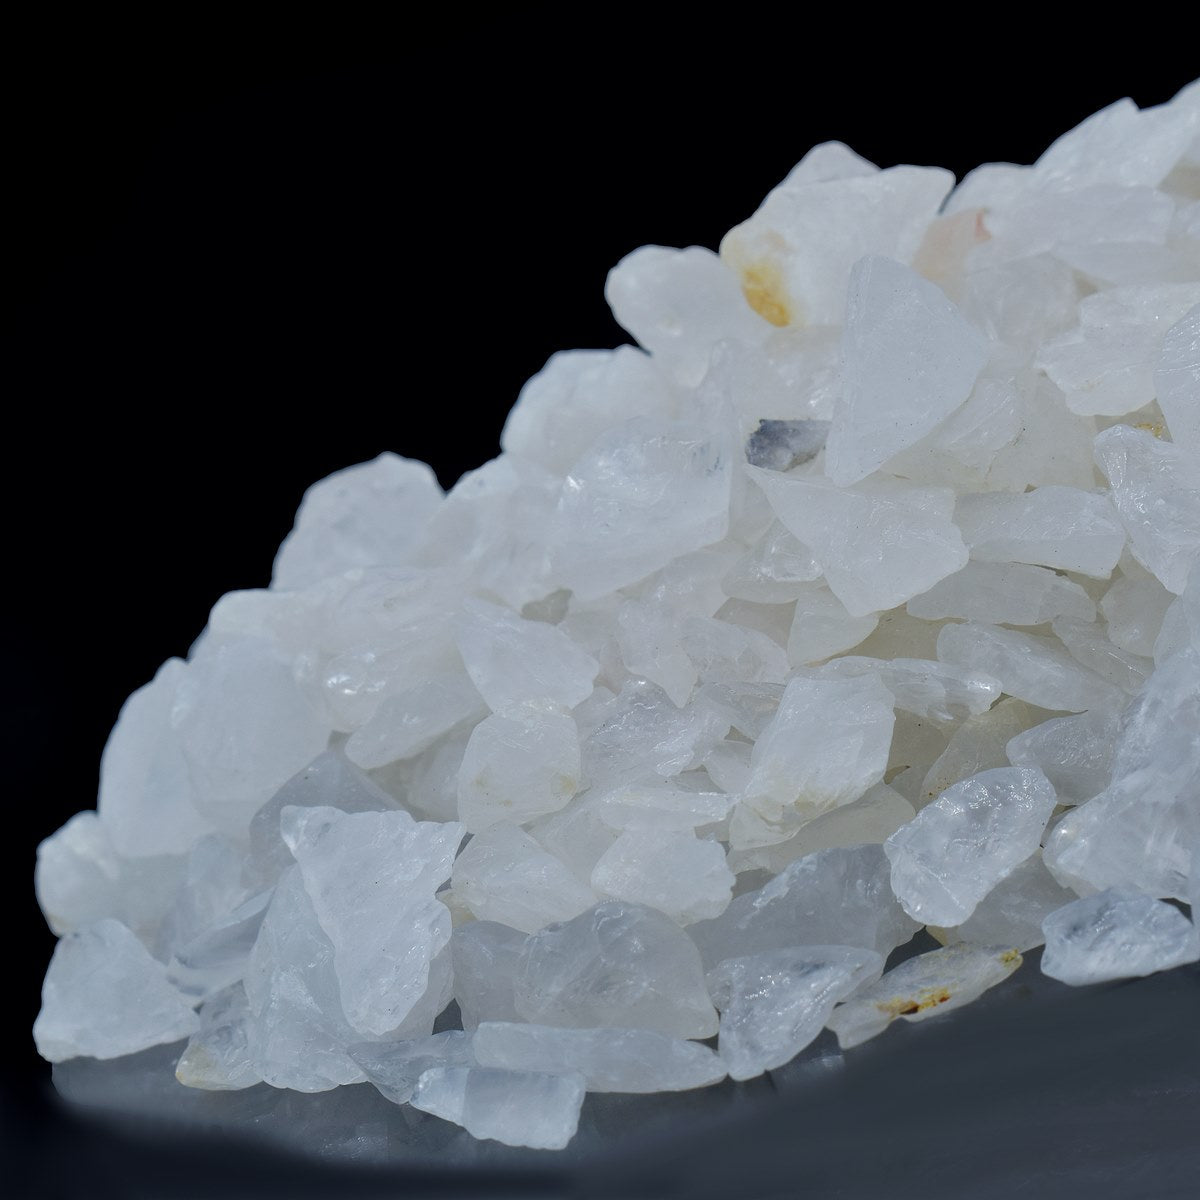 jags-mumbai Stone Jags resin Stone White Crystal 250gm White JRSM-N